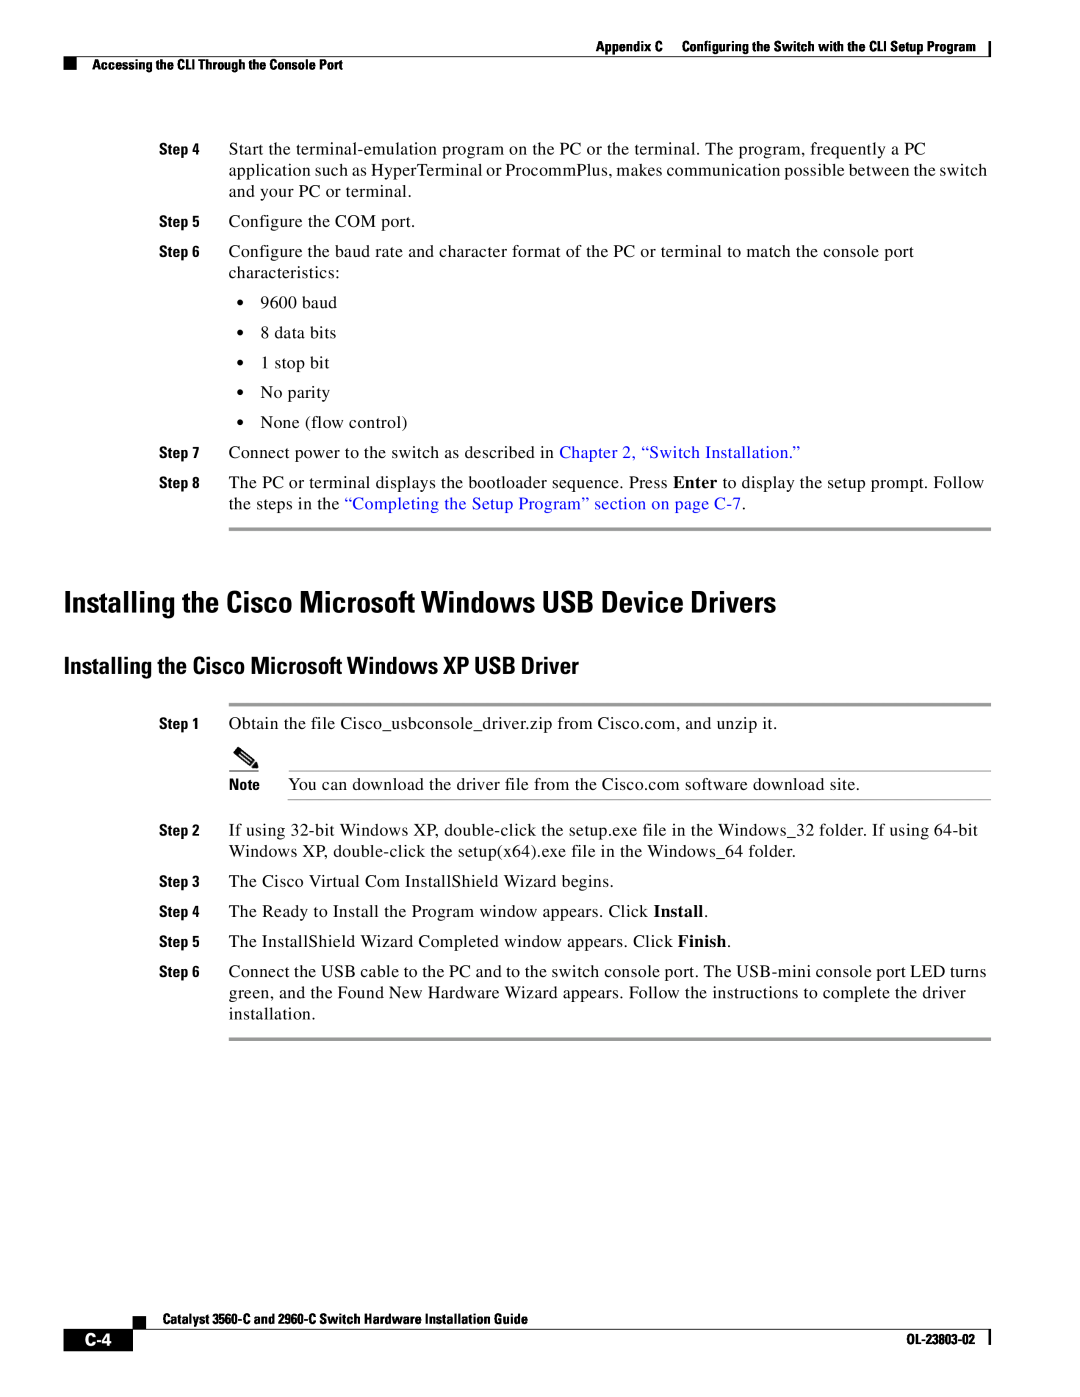 Cisco Systems 3560-C manual Installing the Cisco Microsoft Windows USB Device Drivers 